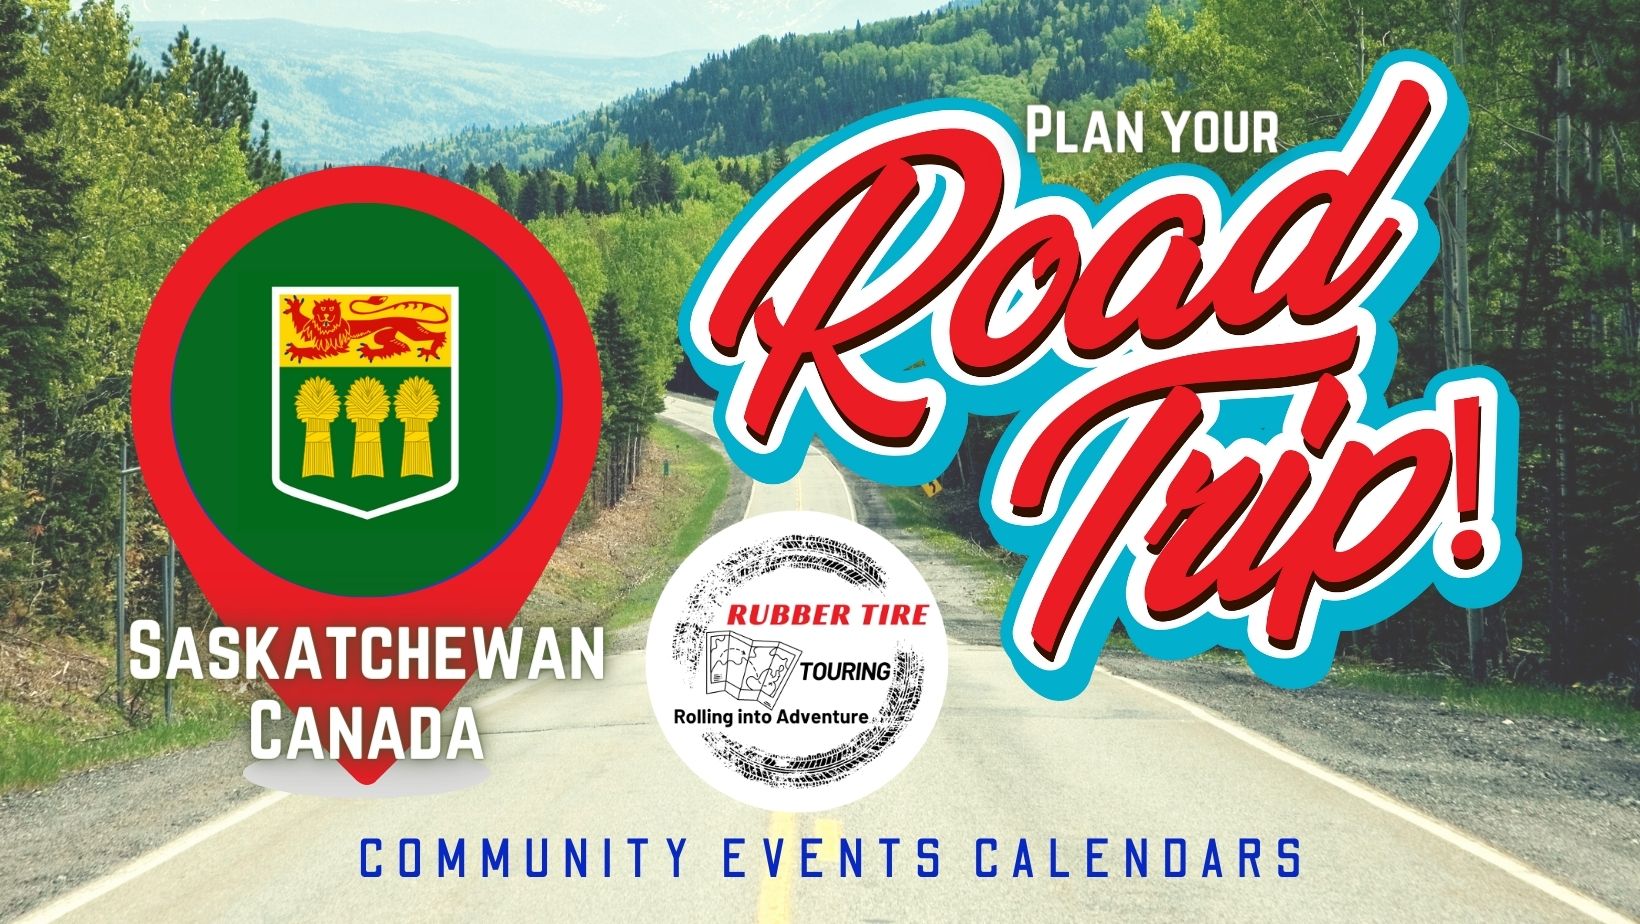 SK Events Calendar - Plan your road trip!